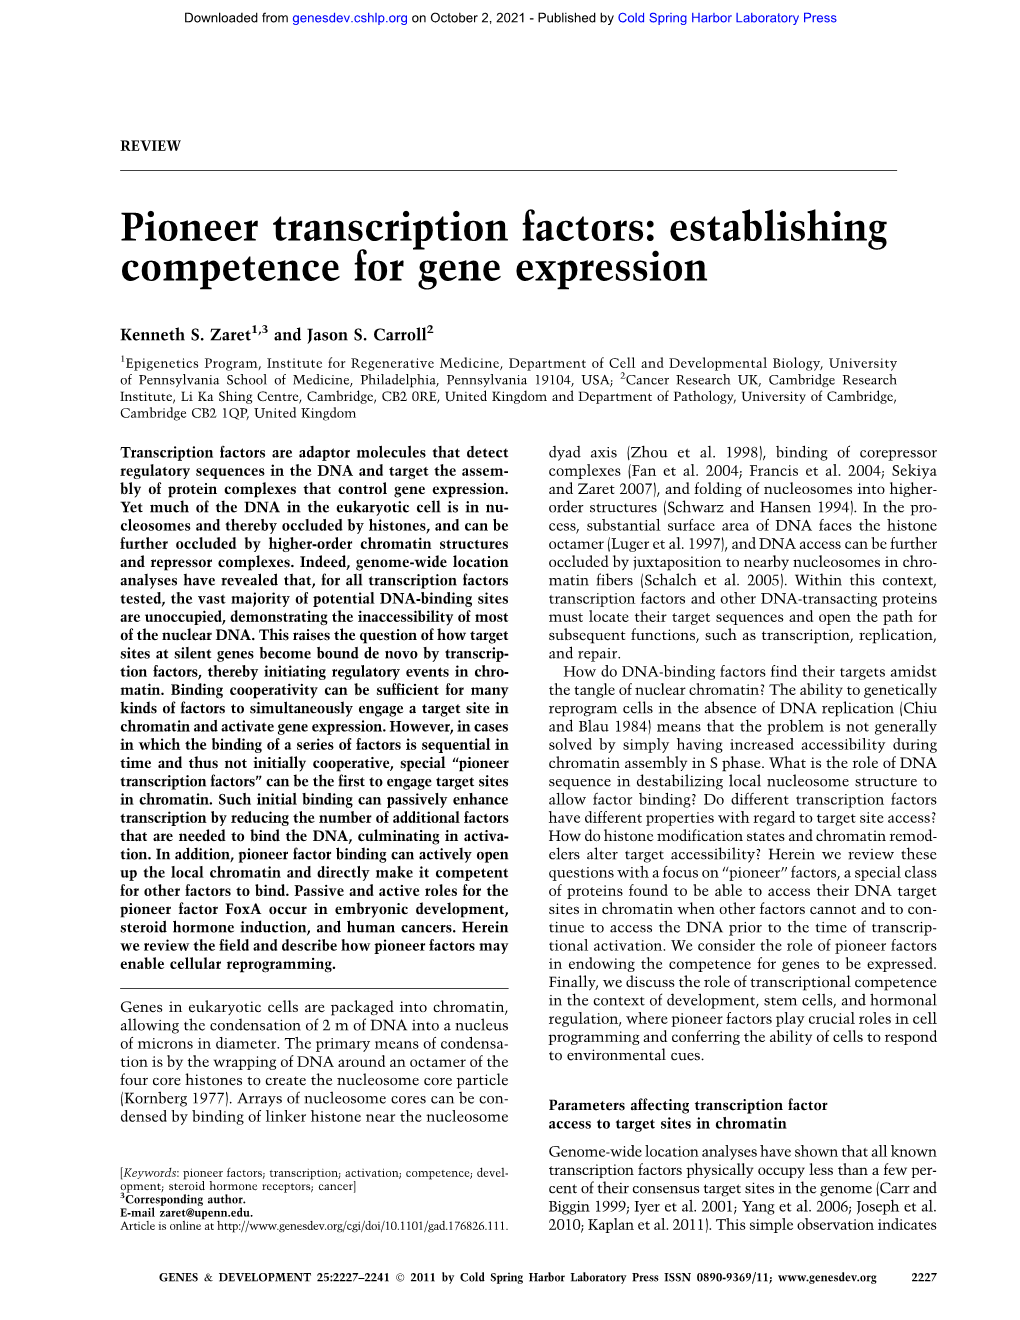 Pioneer Transcription Factors: Establishing Competence for Gene Expression